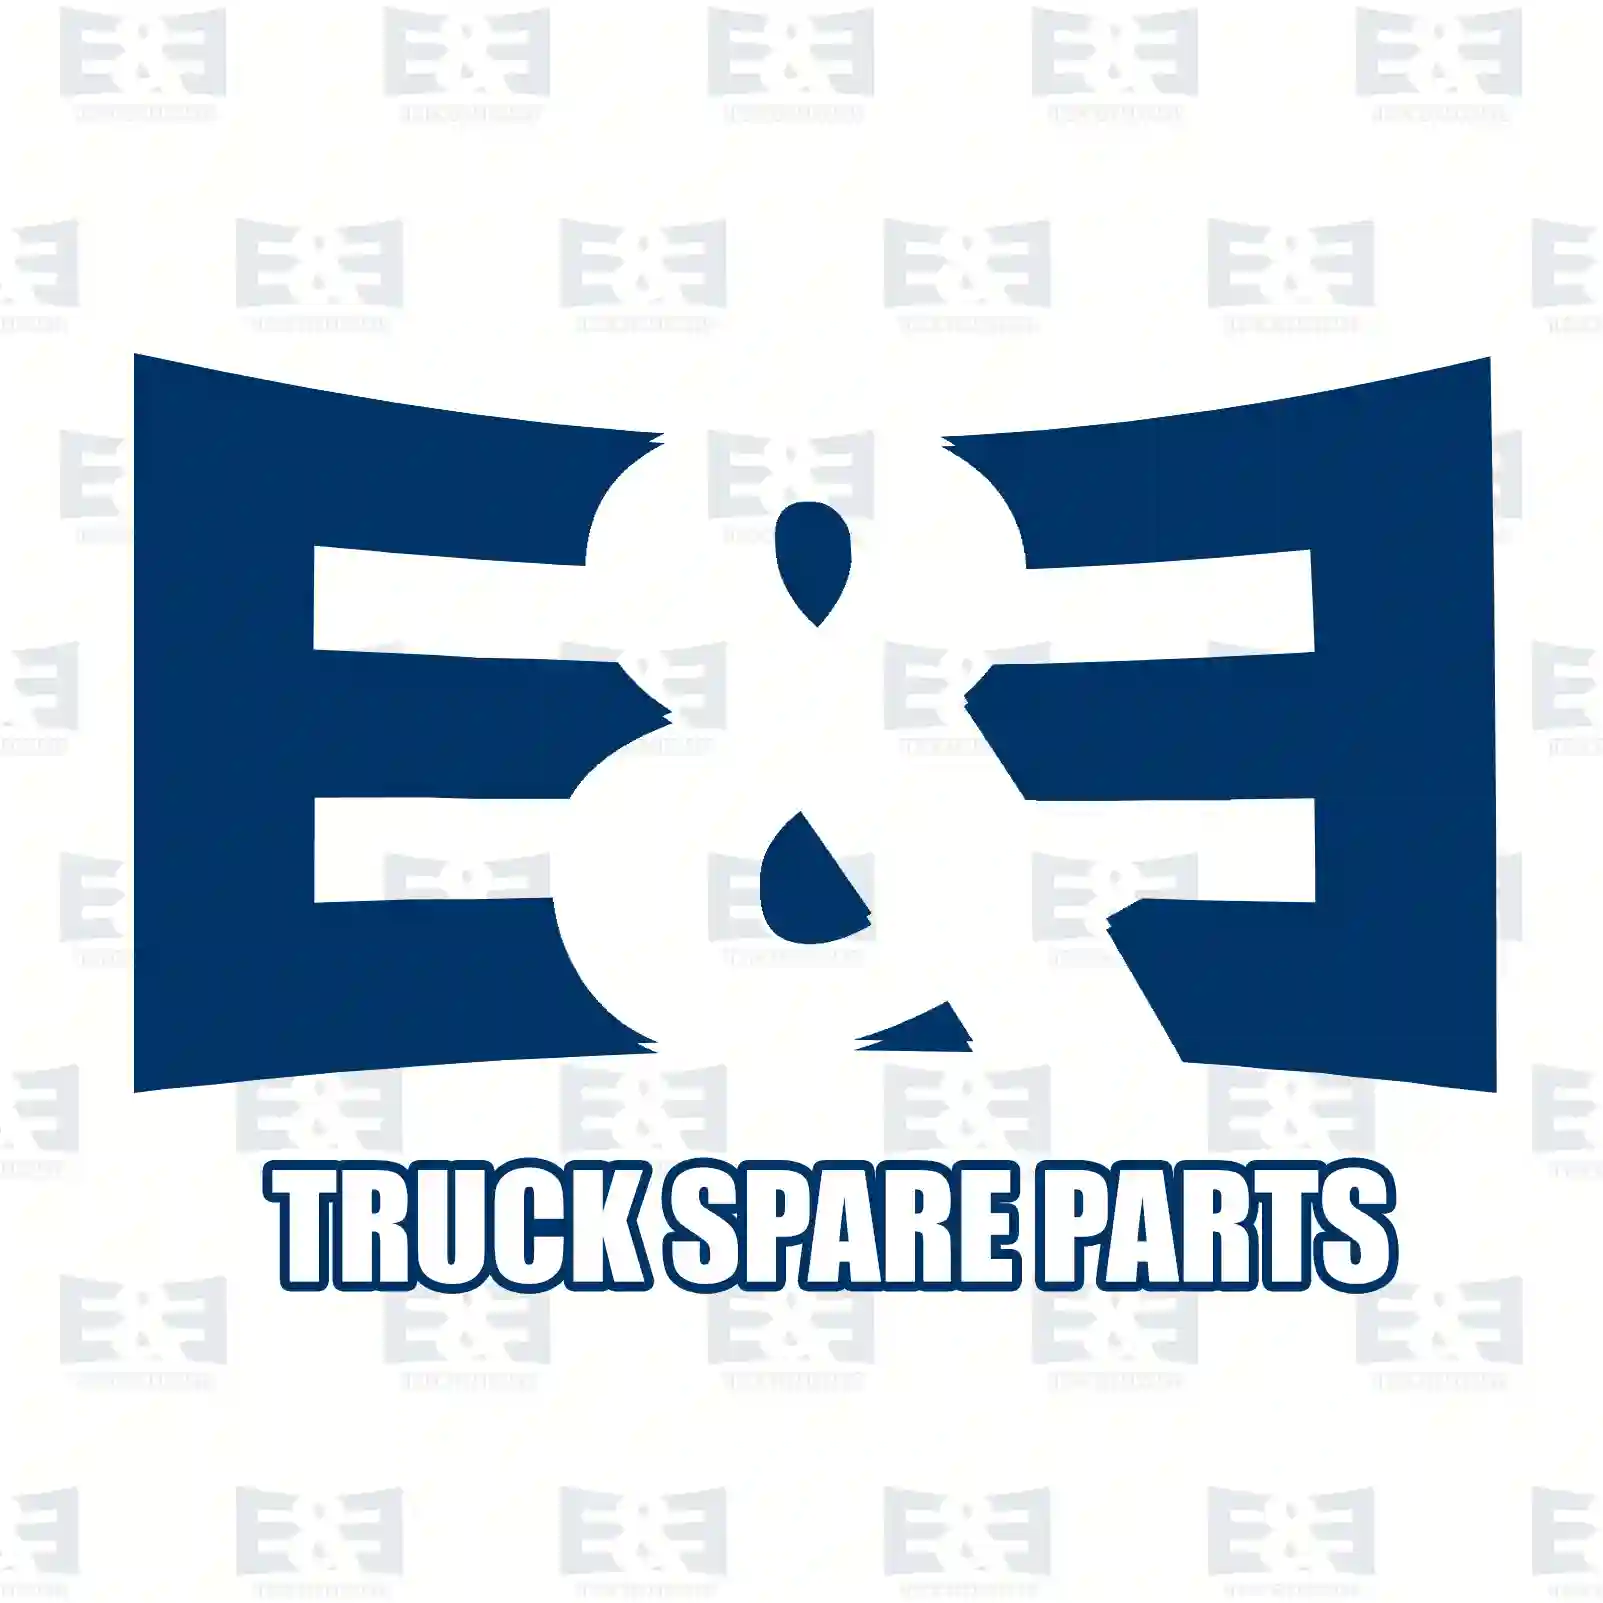 Fan clutch, bimetal, maintenance-free, 2E2201853, 504239361, 580158 ||  2E2201853 E&E Truck Spare Parts | Truck Spare Parts, Auotomotive Spare Parts Fan clutch, bimetal, maintenance-free, 2E2201853, 504239361, 580158 ||  2E2201853 E&E Truck Spare Parts | Truck Spare Parts, Auotomotive Spare Parts